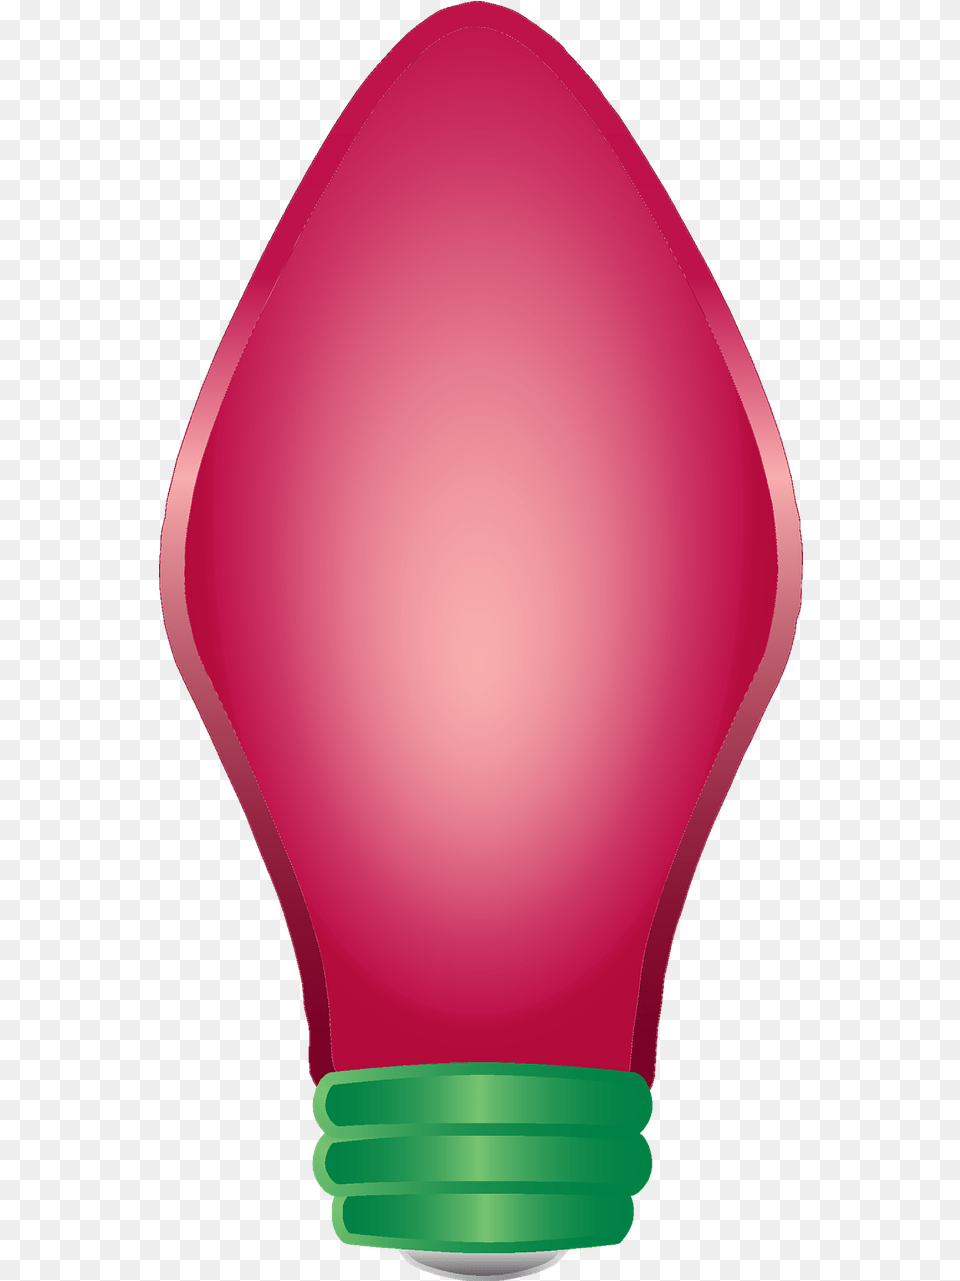 Graphic Christmas Light Bulb Vector Graphic On Pixabay Illustration, Ammunition, Grenade, Weapon, Lightbulb Free Transparent Png